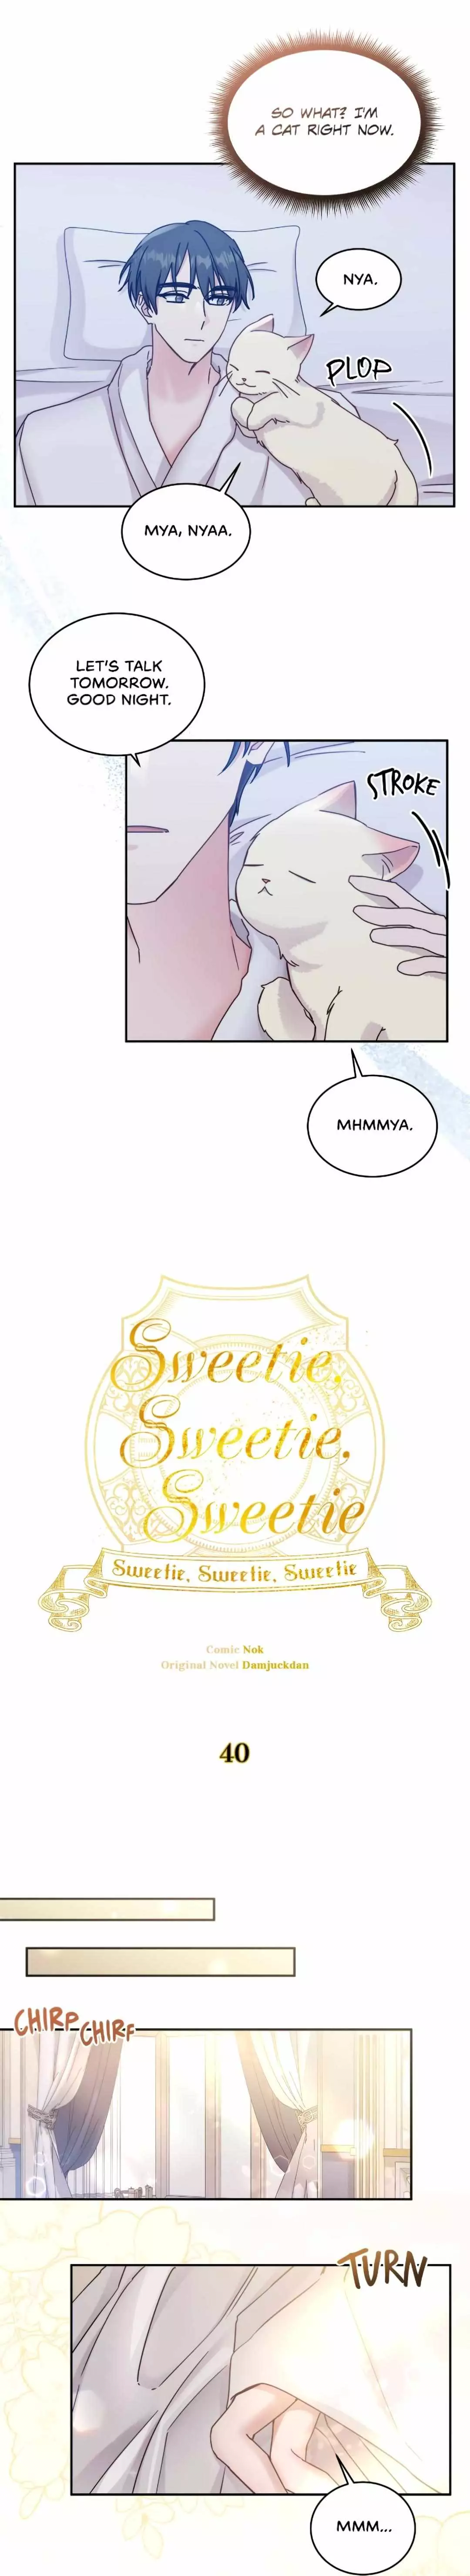 Sweetie, Sweetie, Sweetie - 40 page 13-c8565bca